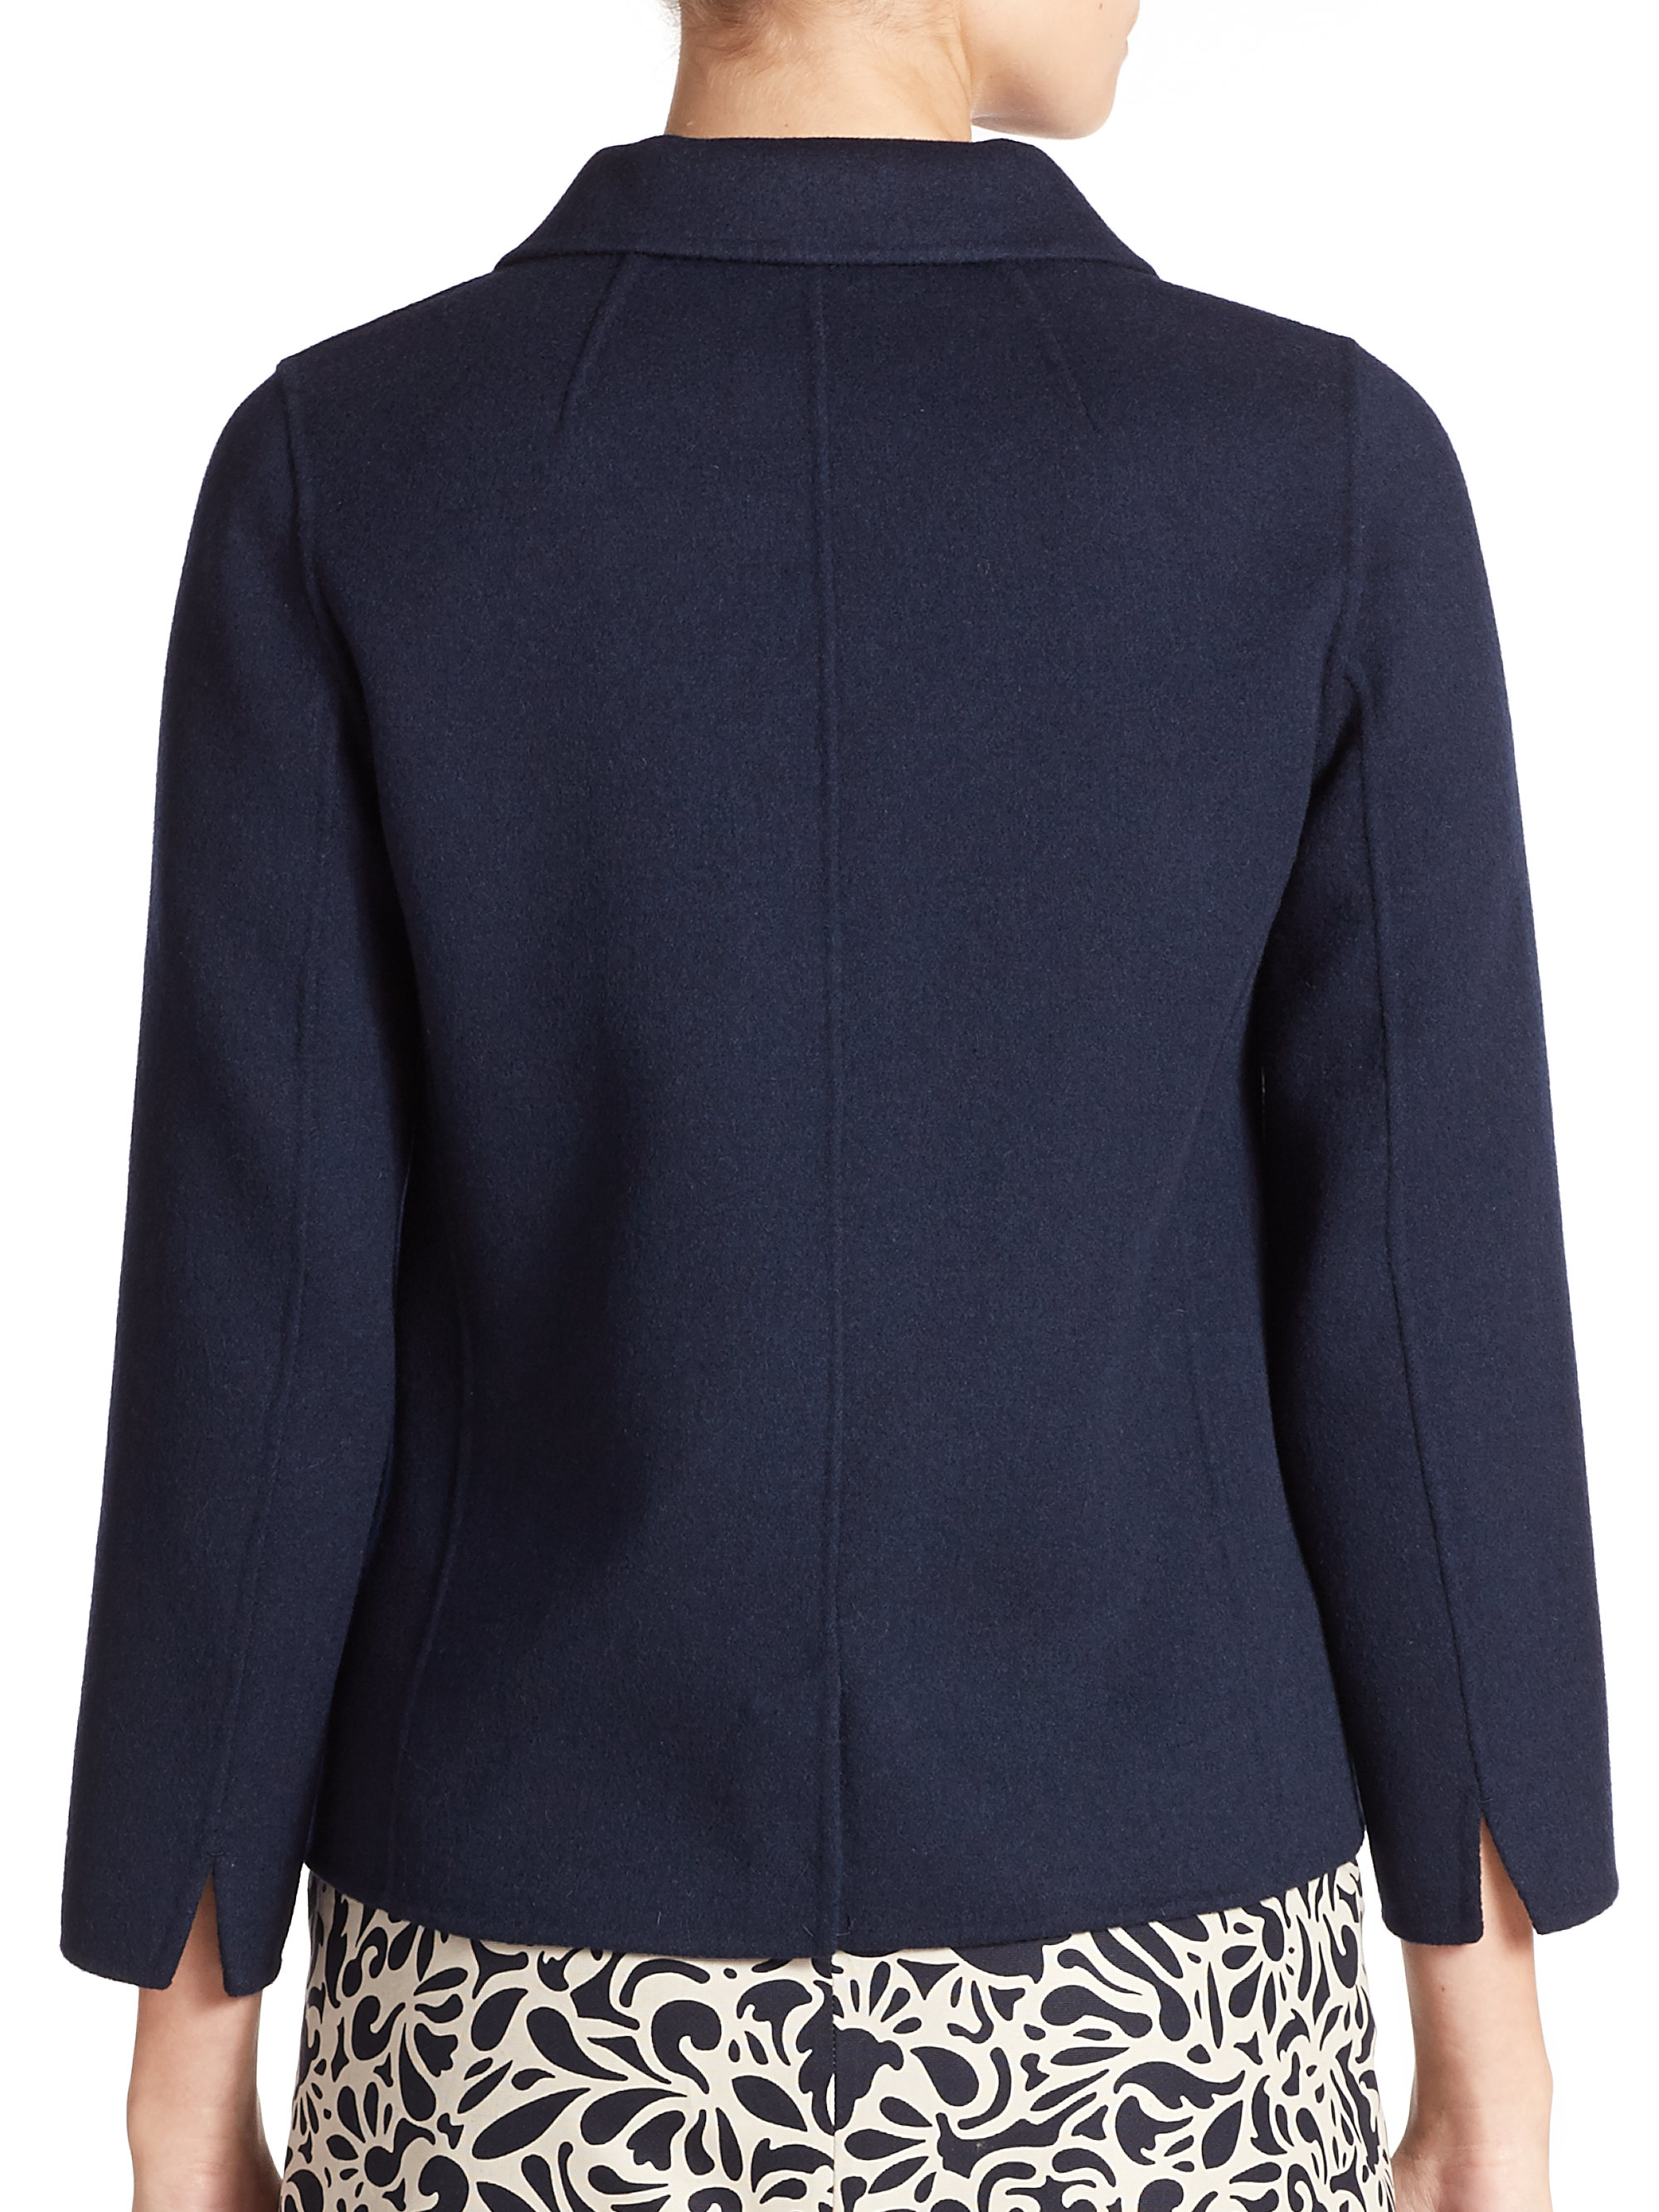 Lyst - Max Mara Treviso Wool Jacket in Blue